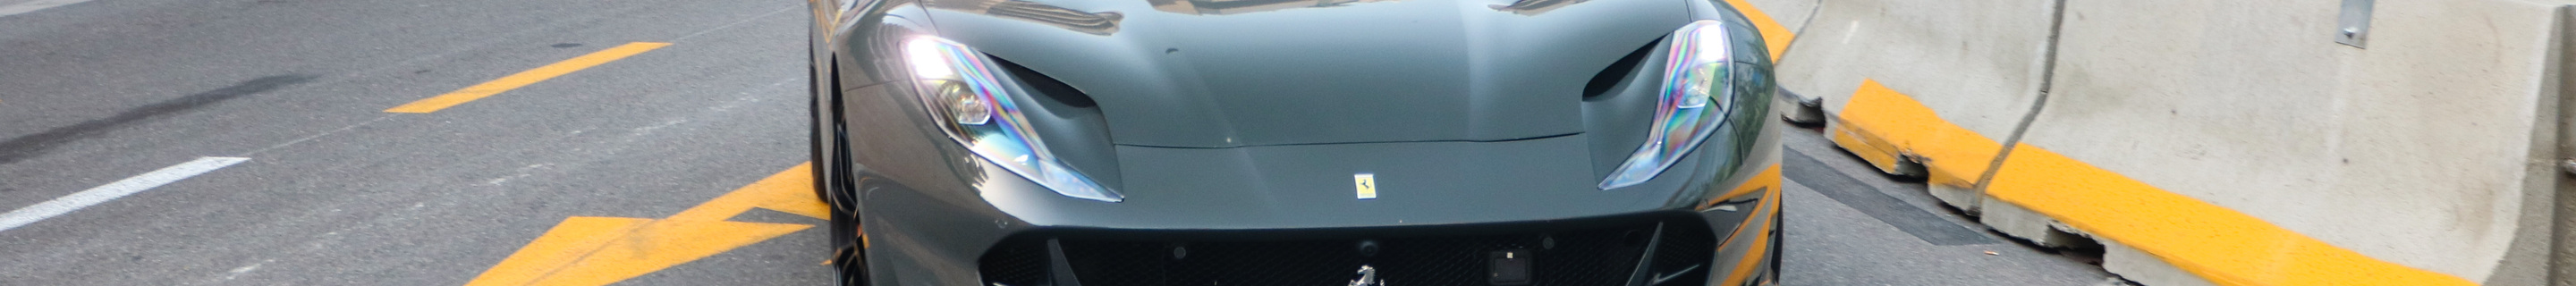 Ferrari 812 GTS